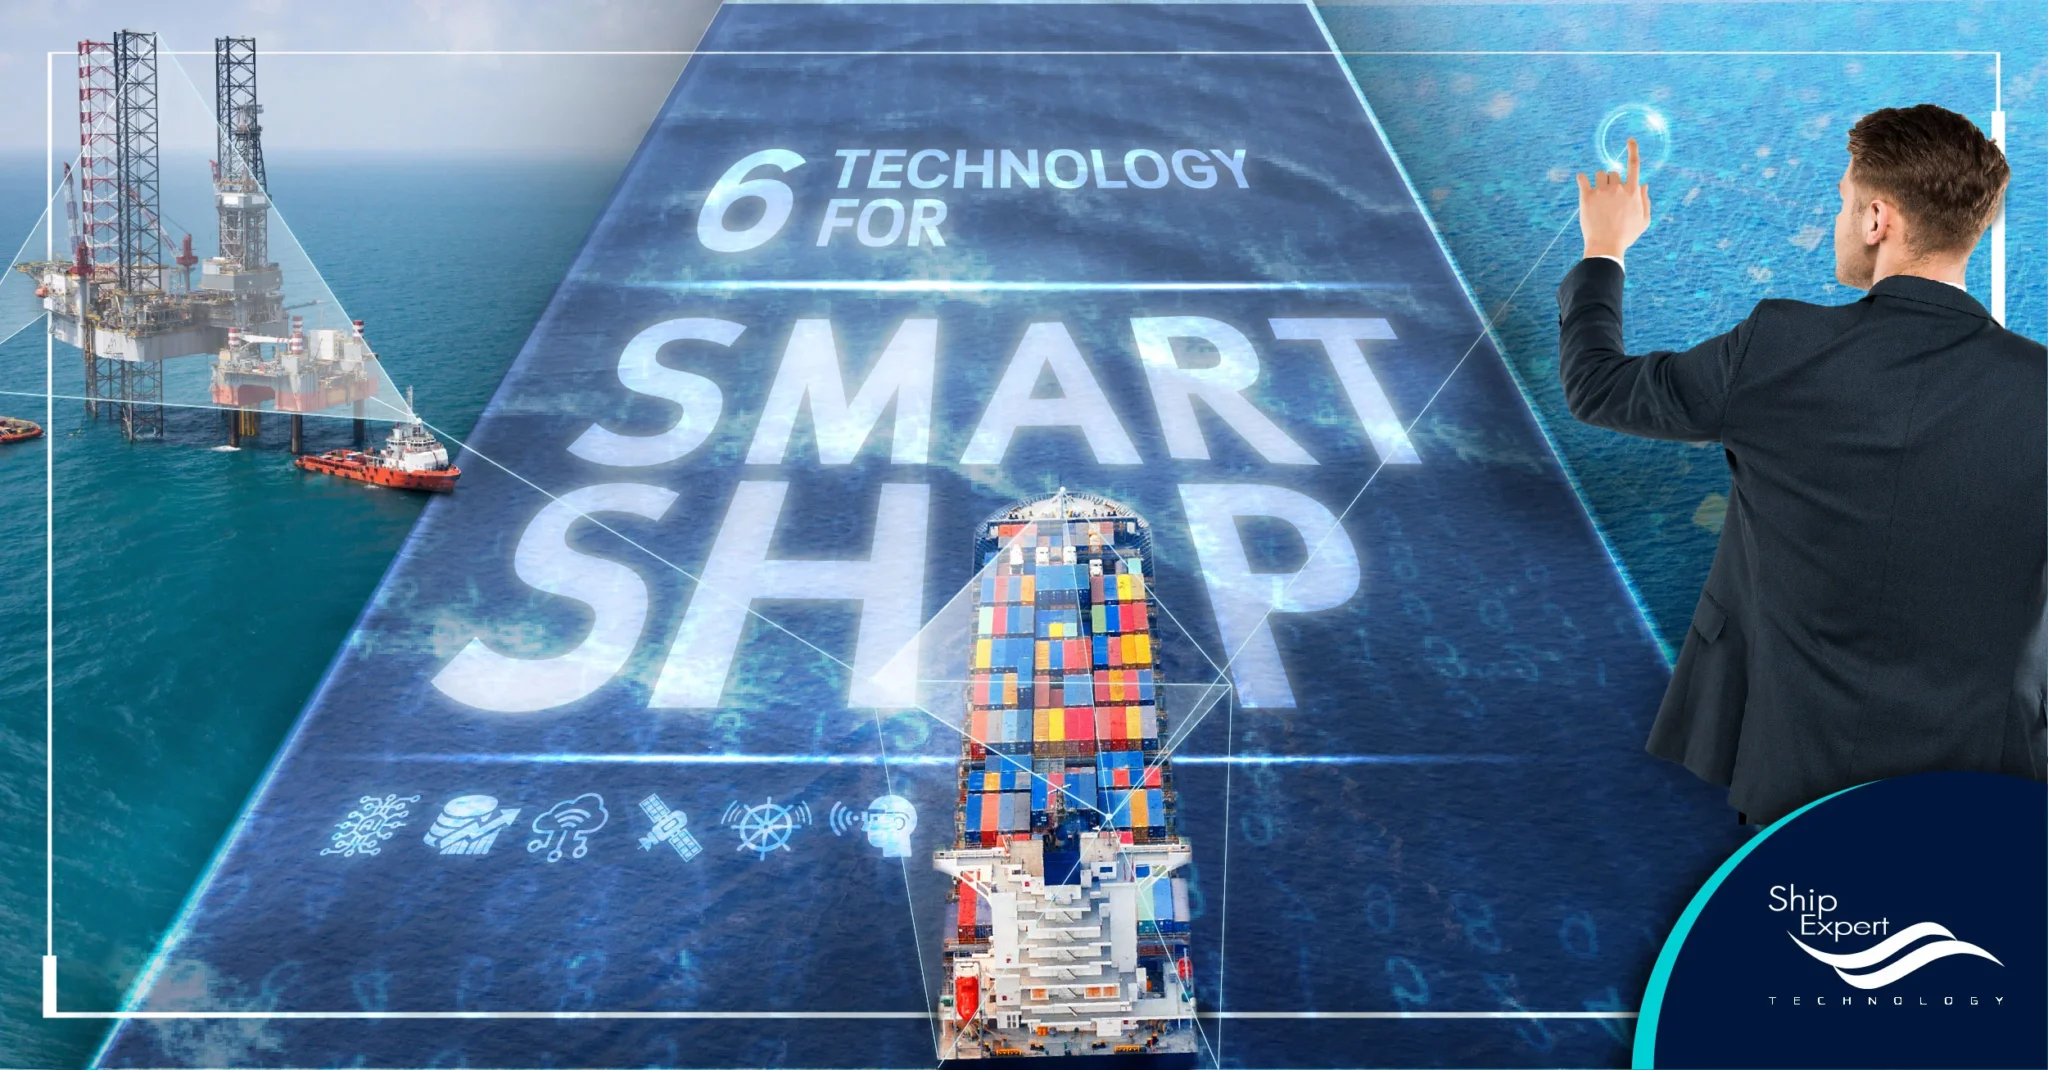 6 Technology for Smart Ship